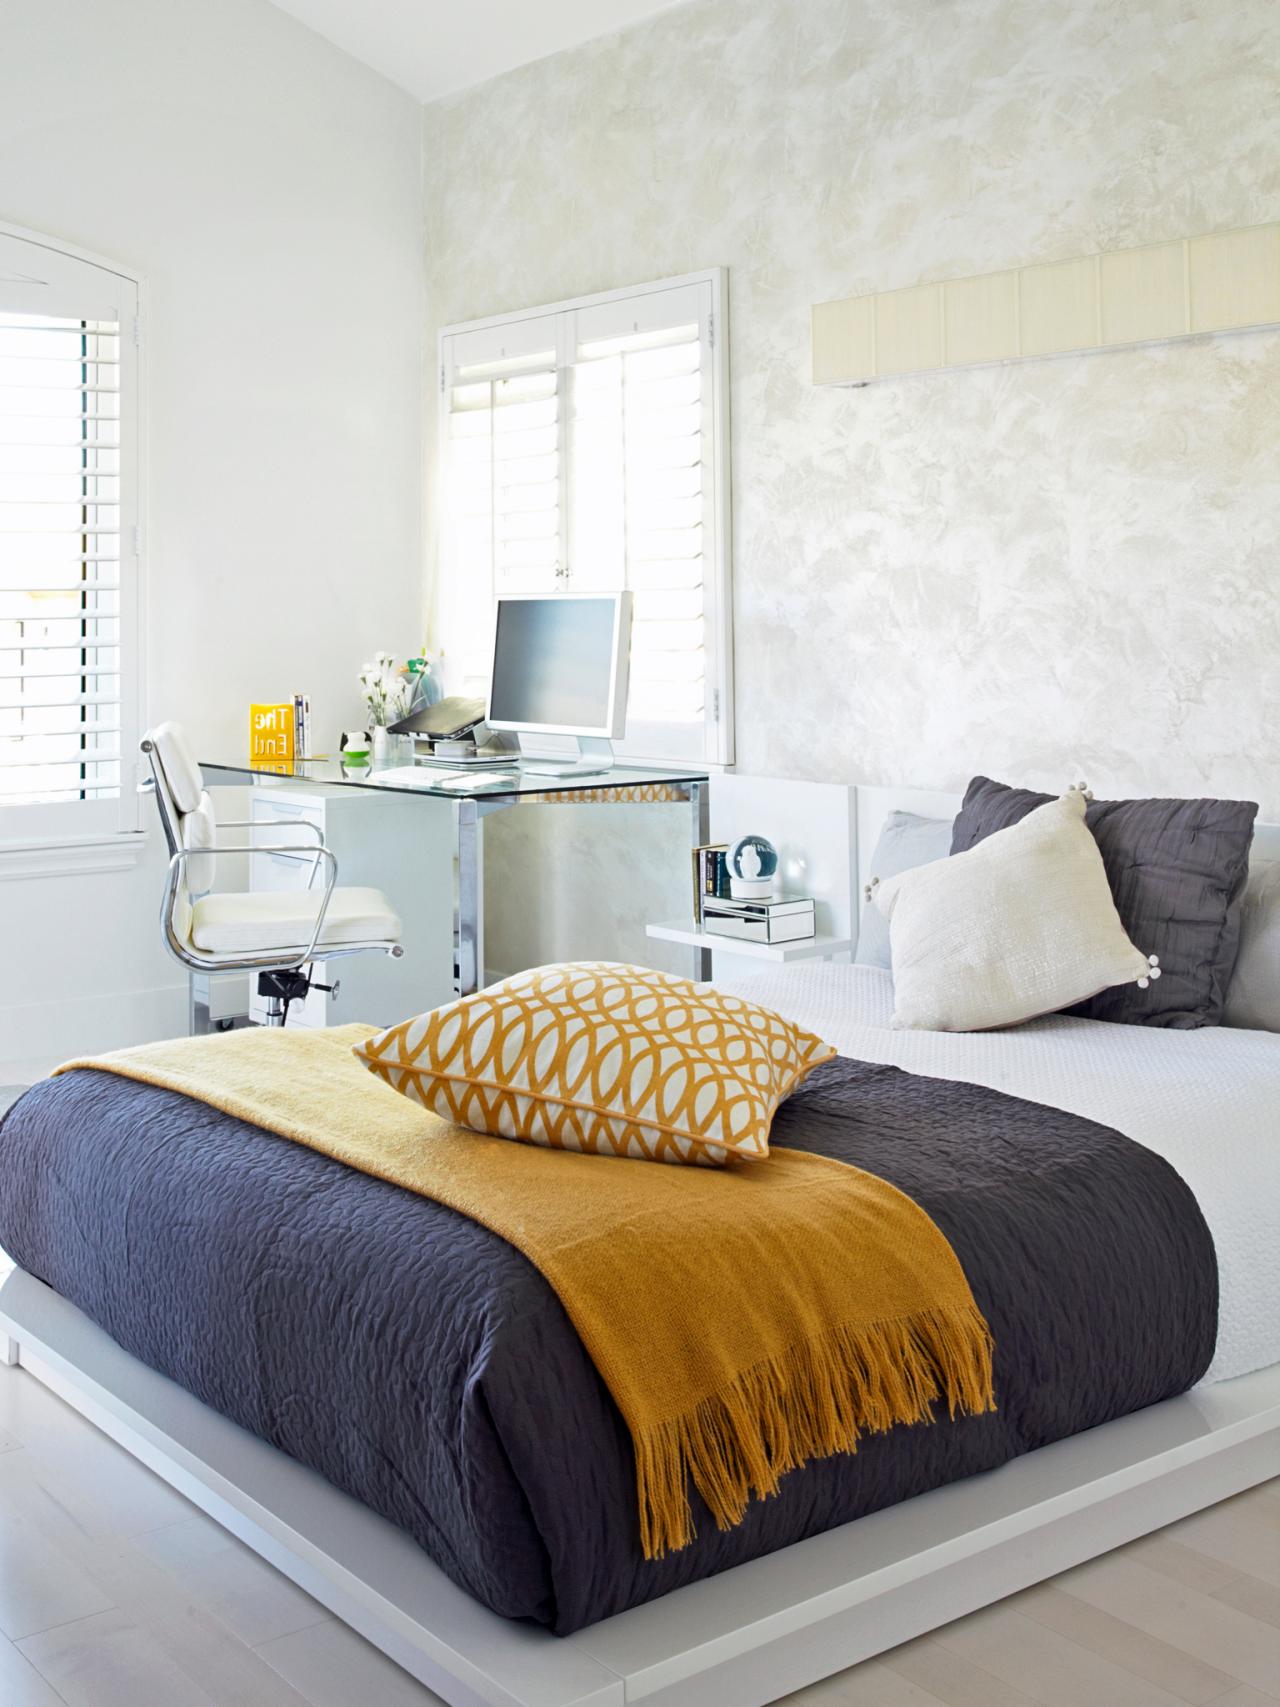 Original peggy dupuis gray yellow white bedroom platform bed.jpg.rend.hgtvcom.1280.1707